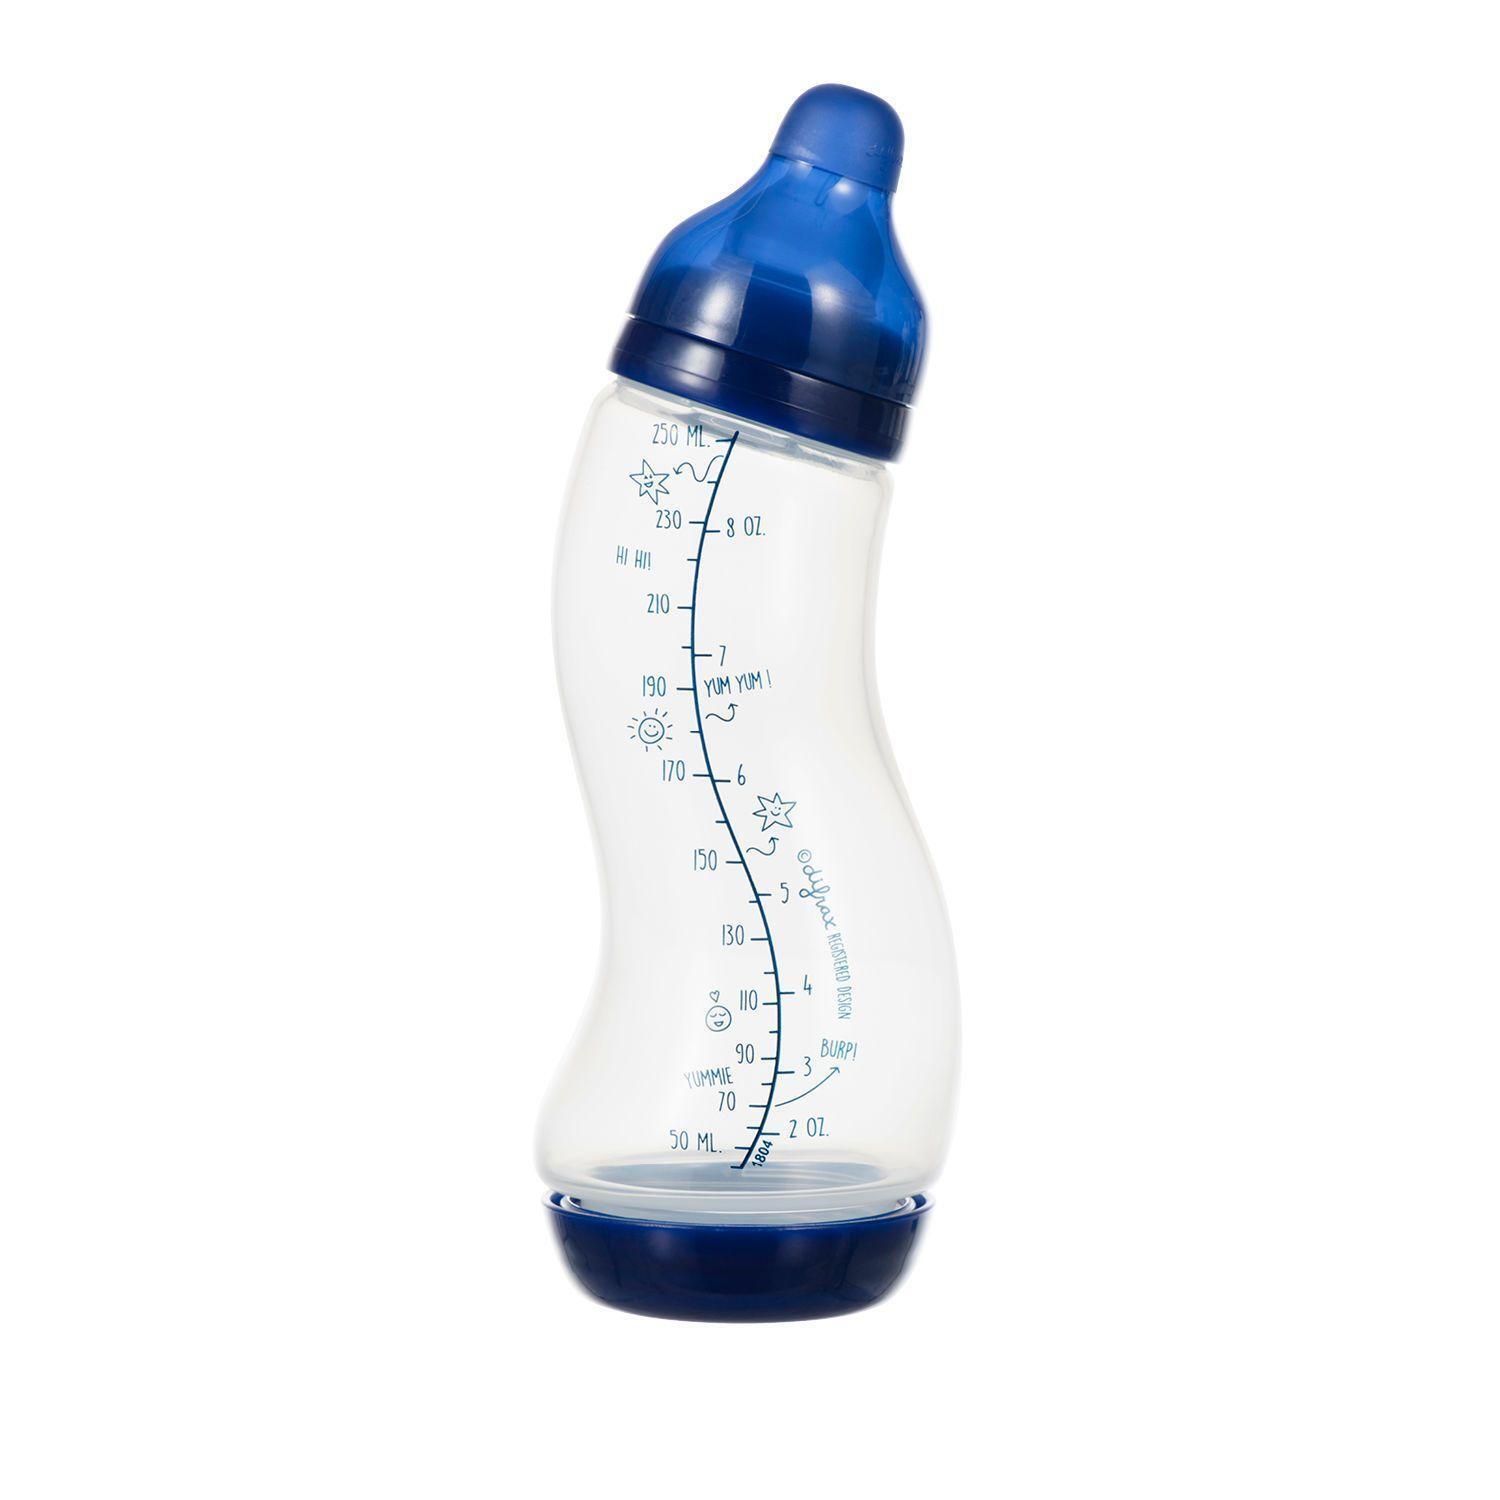 Difrax S-Bottle standard 250ml